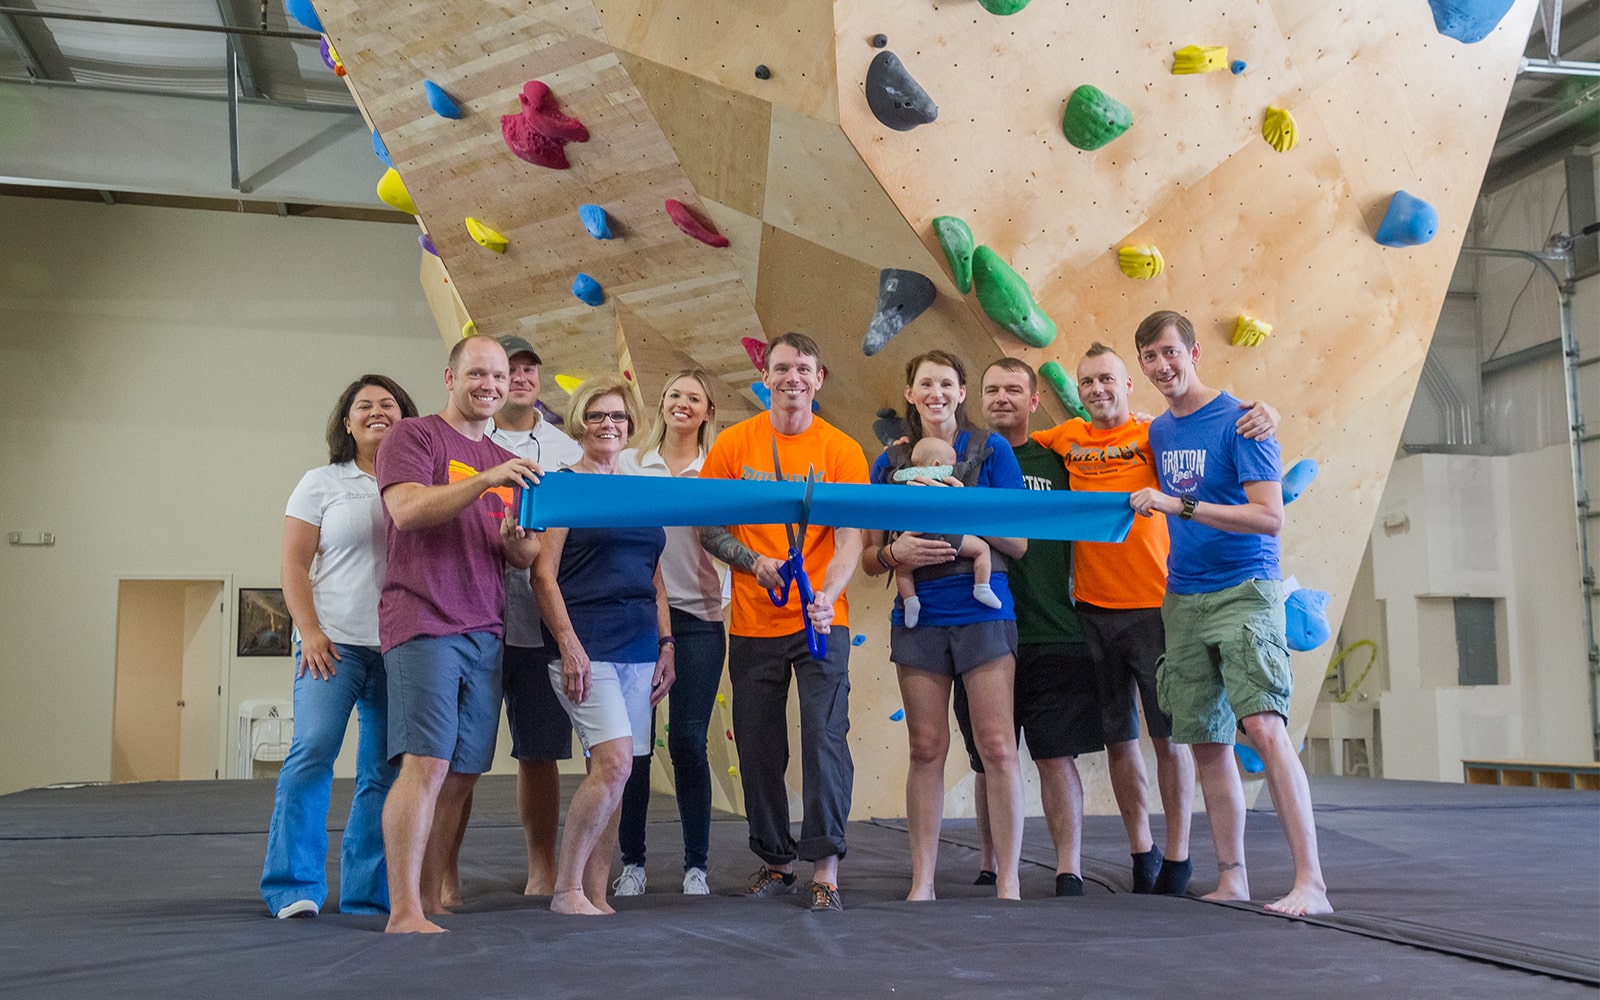 Grand opening of indoor rock climbing gym